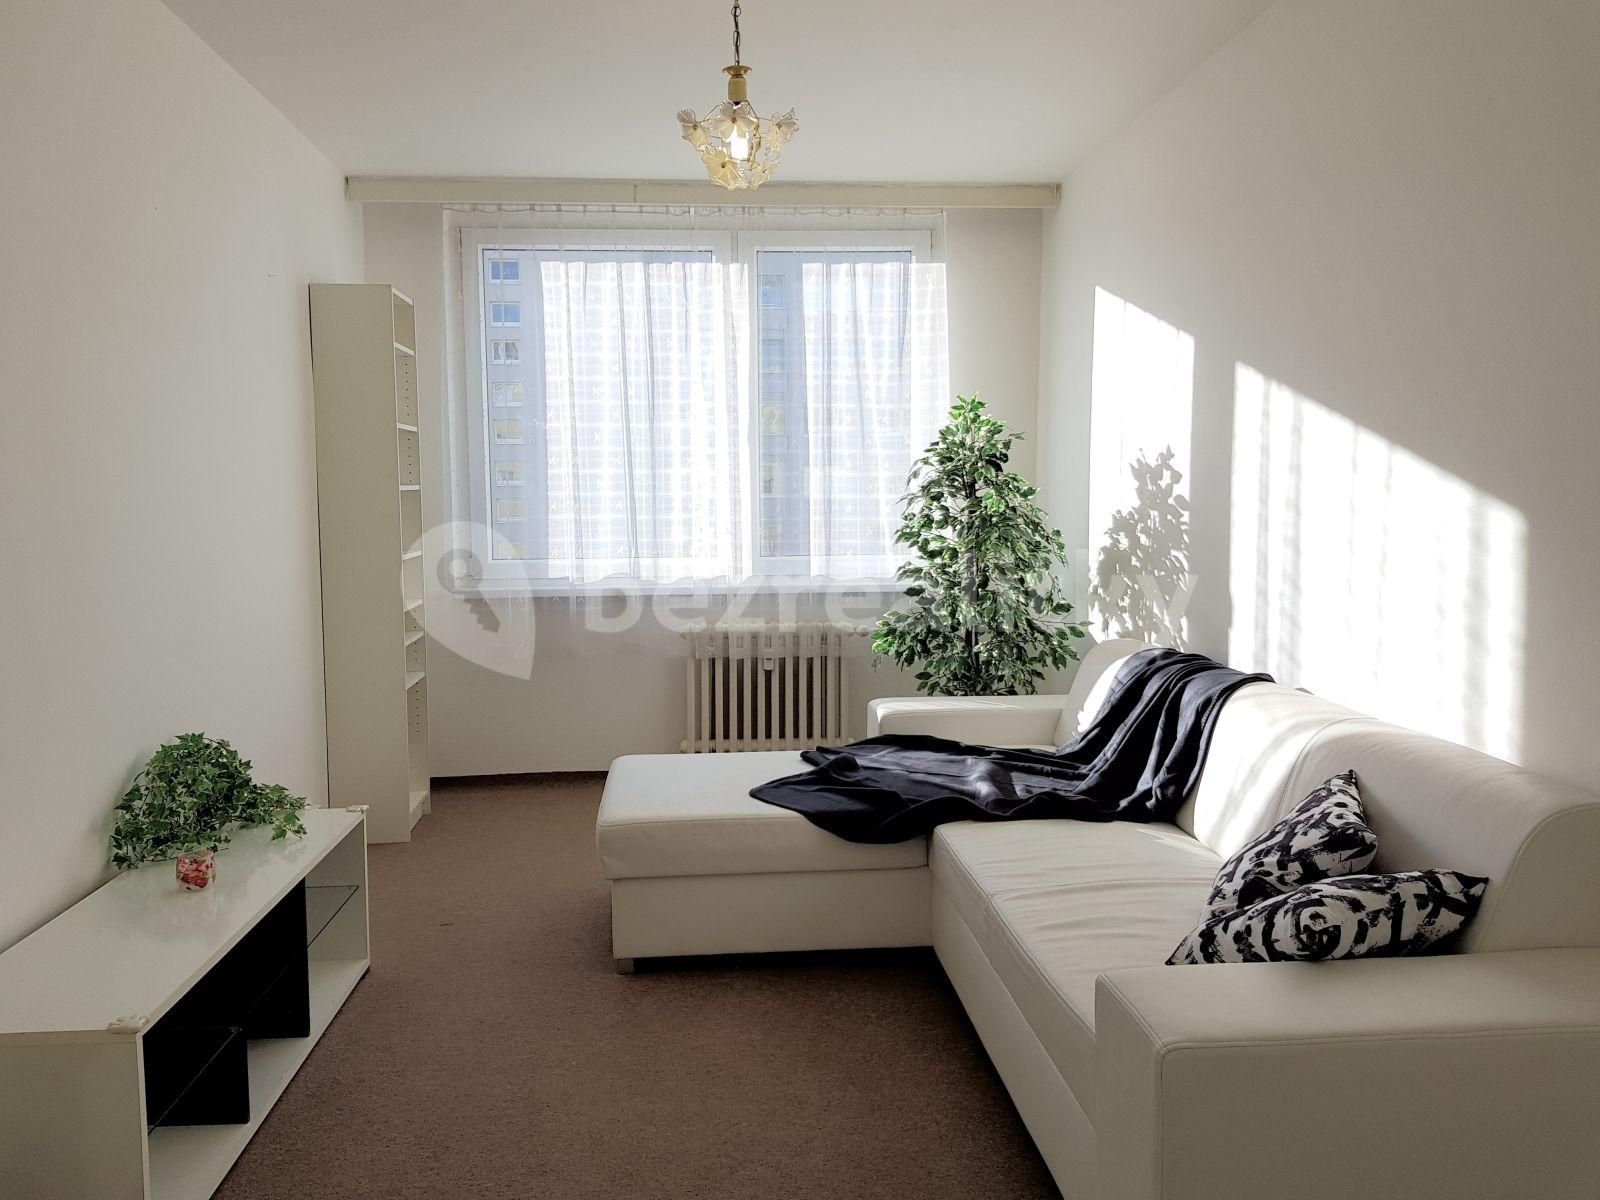 1 bedroom with open-plan kitchen flat to rent, 40 m², Bryksova, Prague, Prague